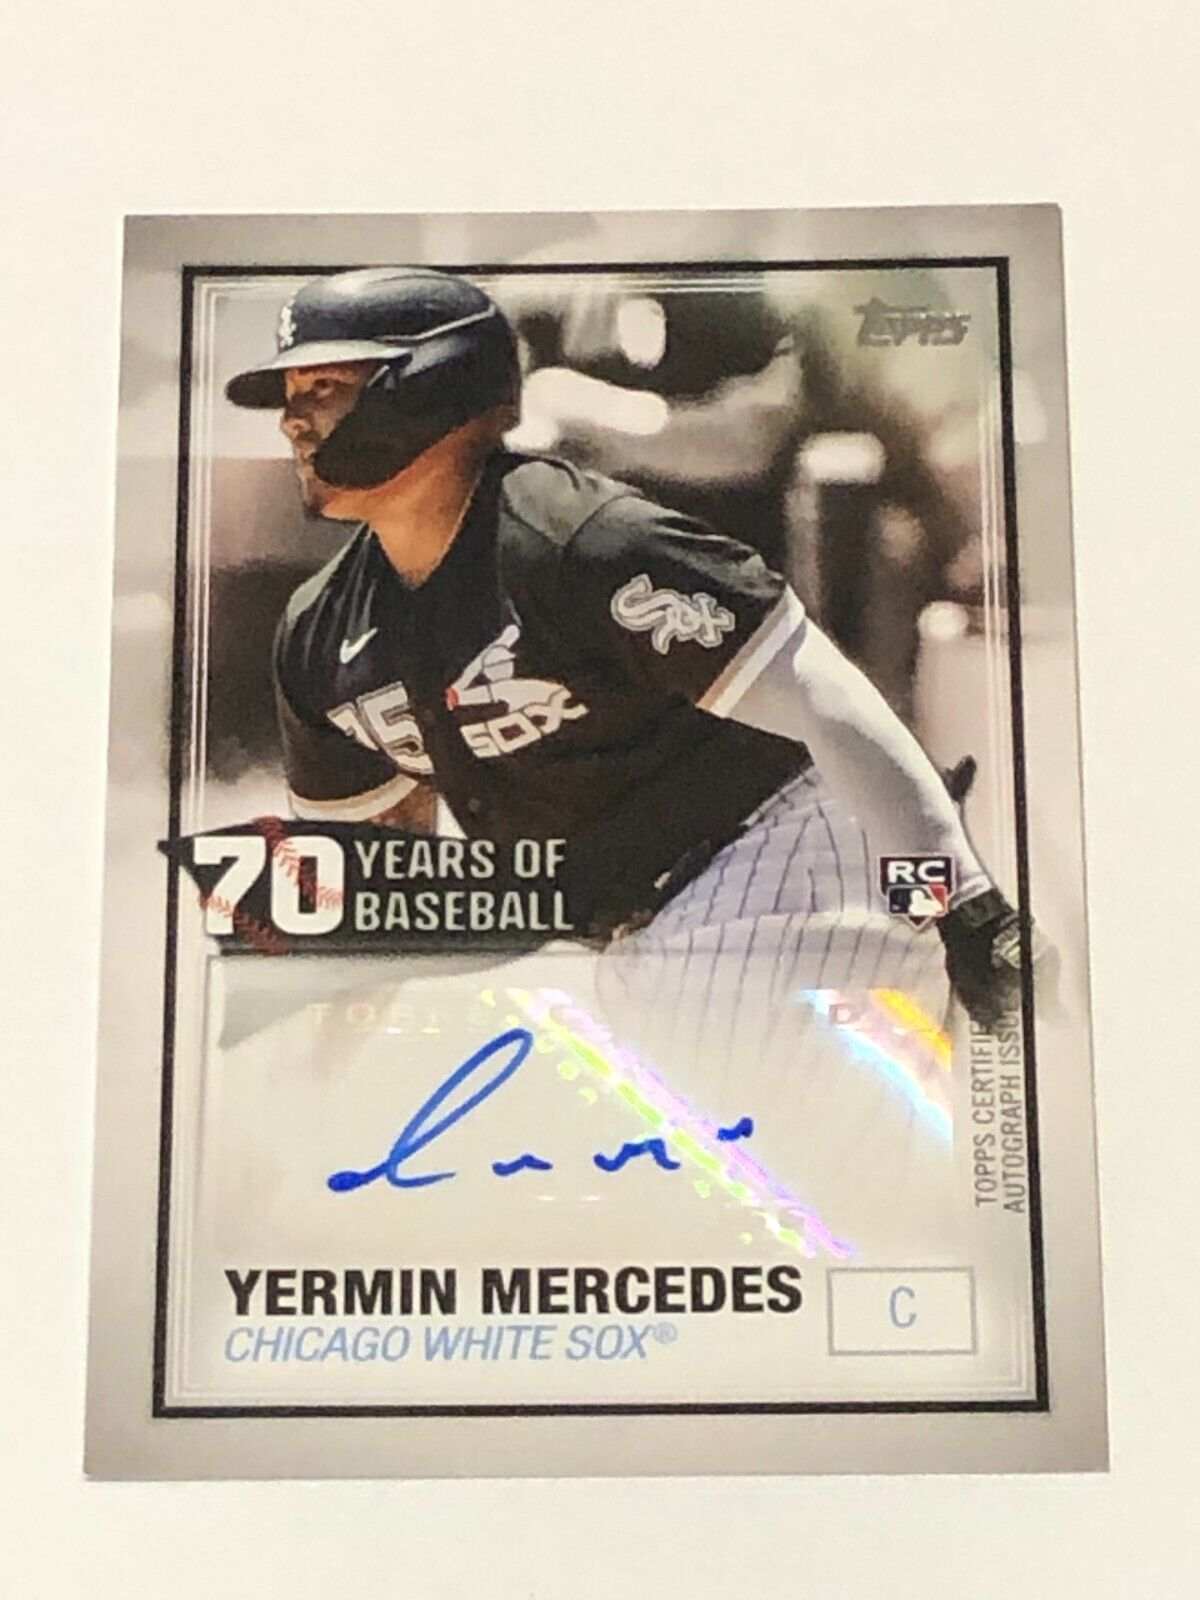 Yermin Mercedes 2021 Topps 70 Years of Baseball Autograph Rookie Card #70YAYM